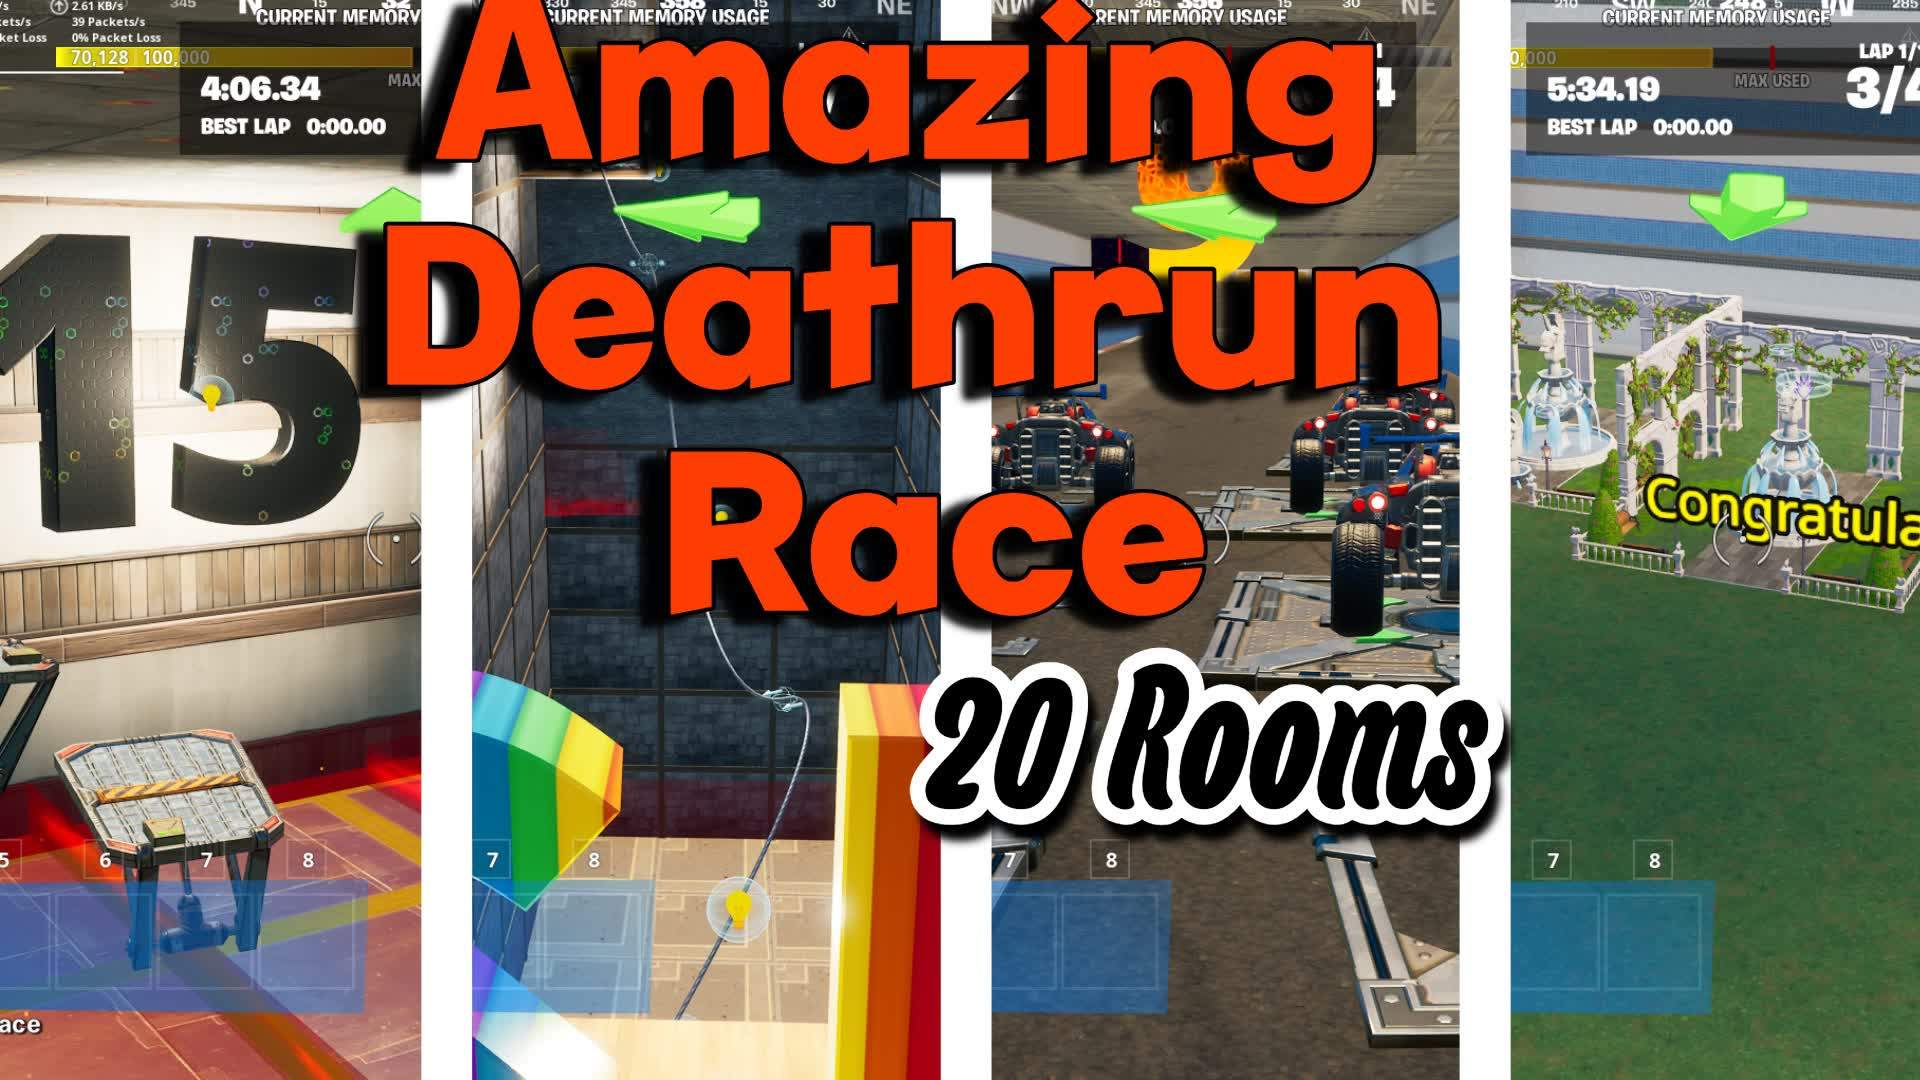 Amazing Deathrun Race- 20 Rooms